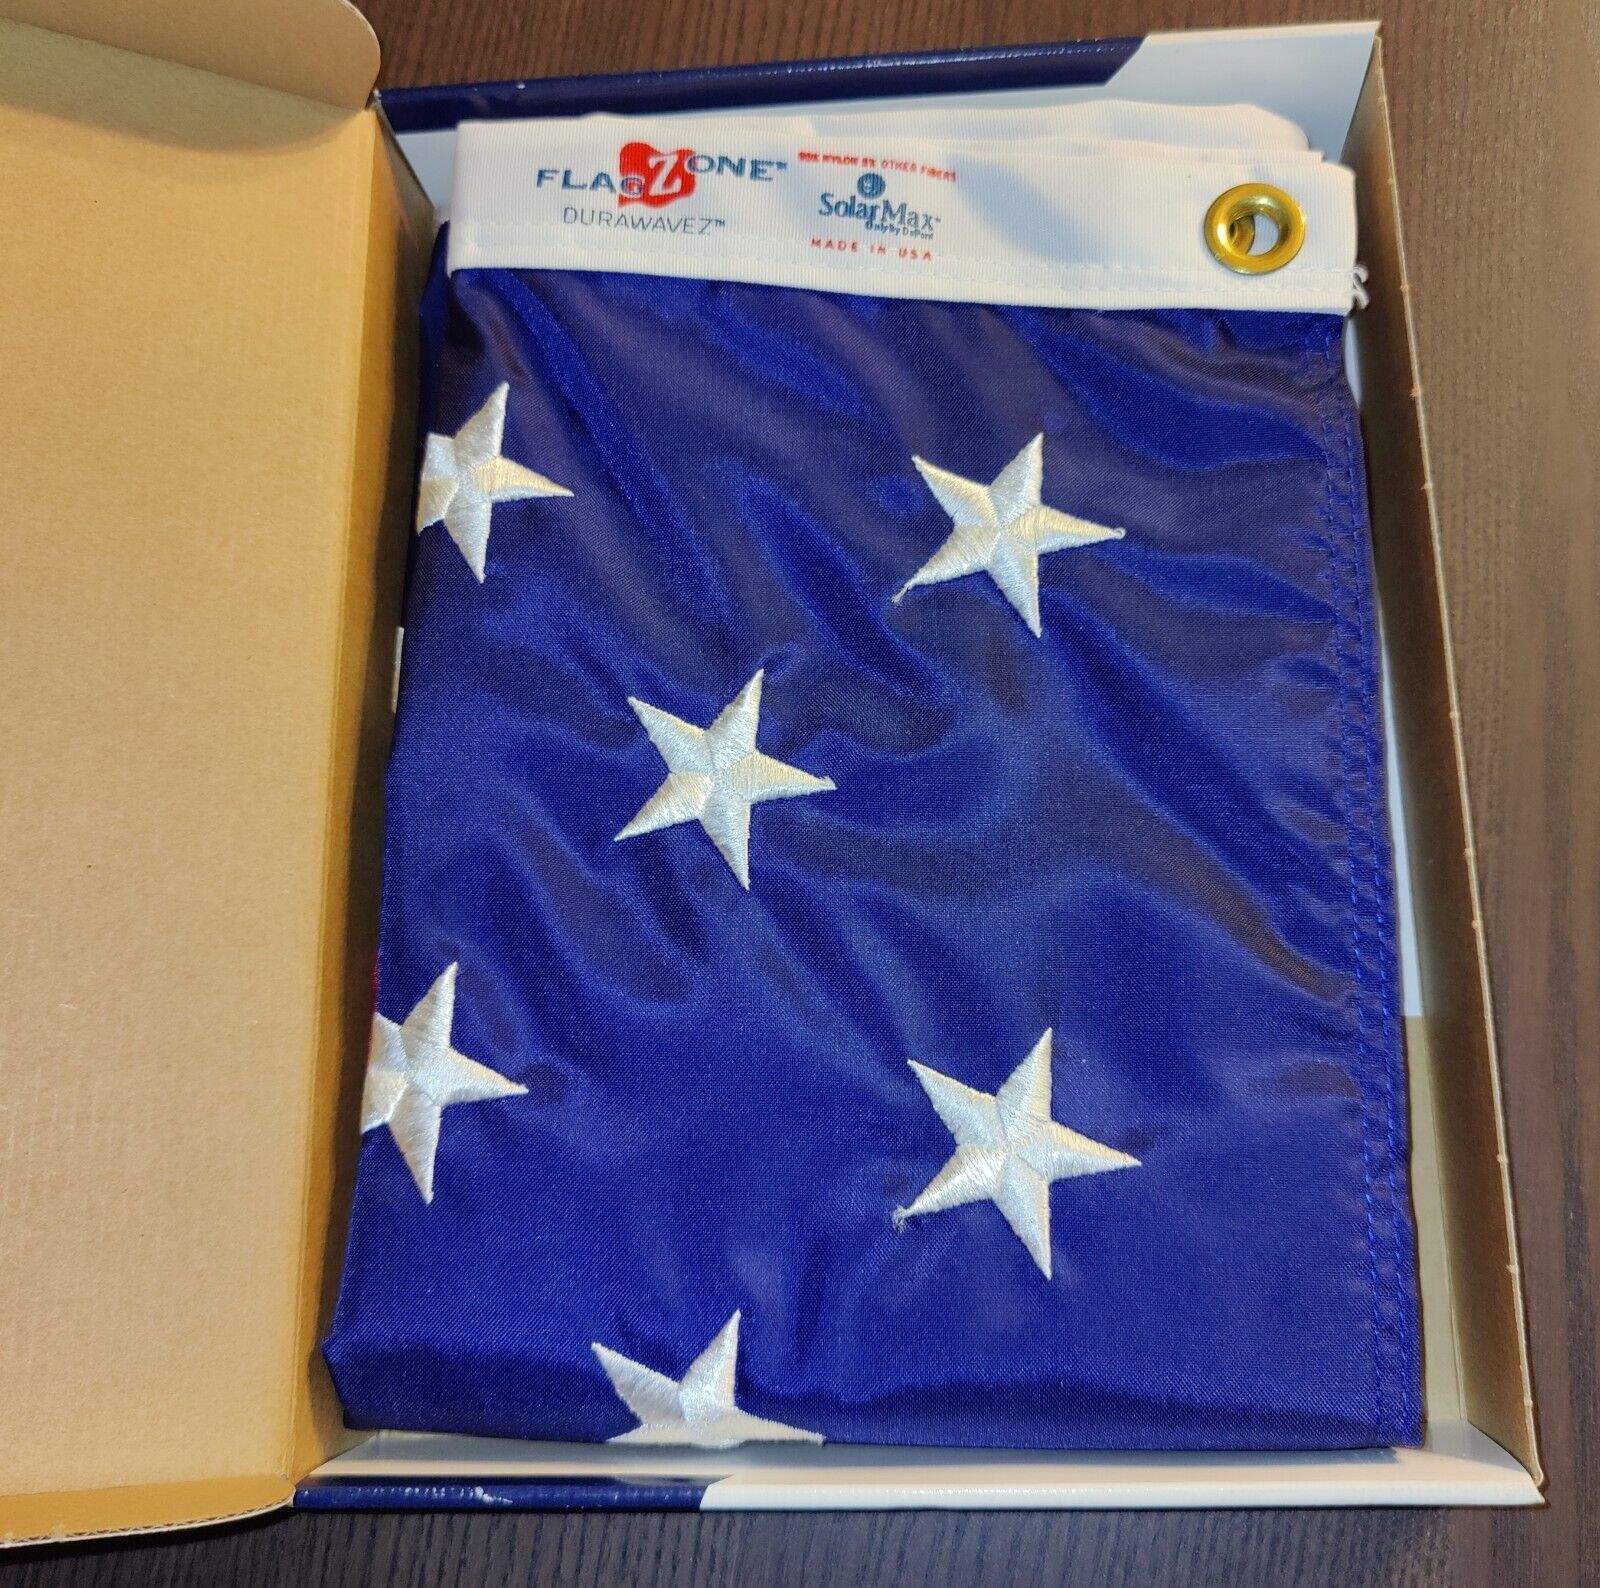 FlagZone Durawavez Nylon Outdoor US Flag with Heading Grommets 4' x 6' Open Box